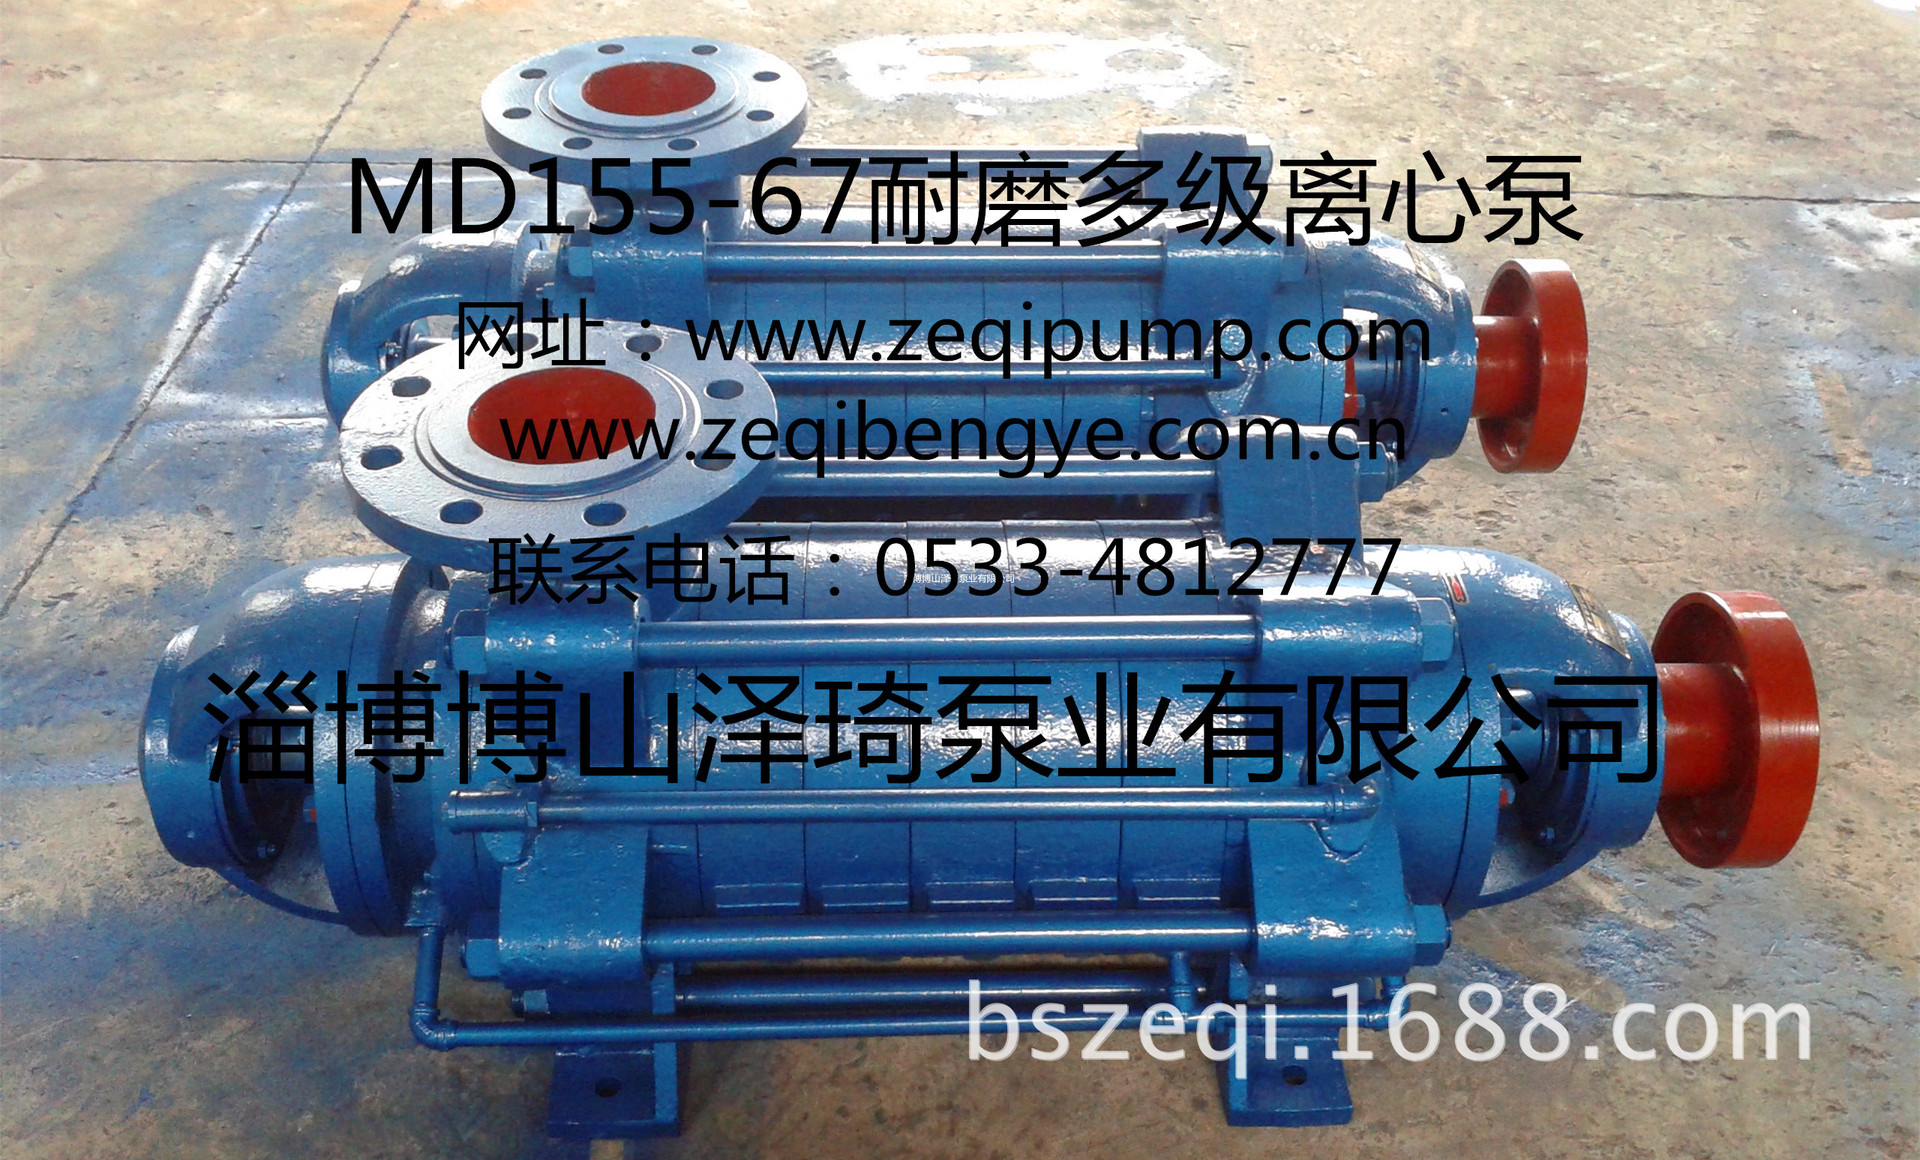 MD155-67耐磨多级离心泵